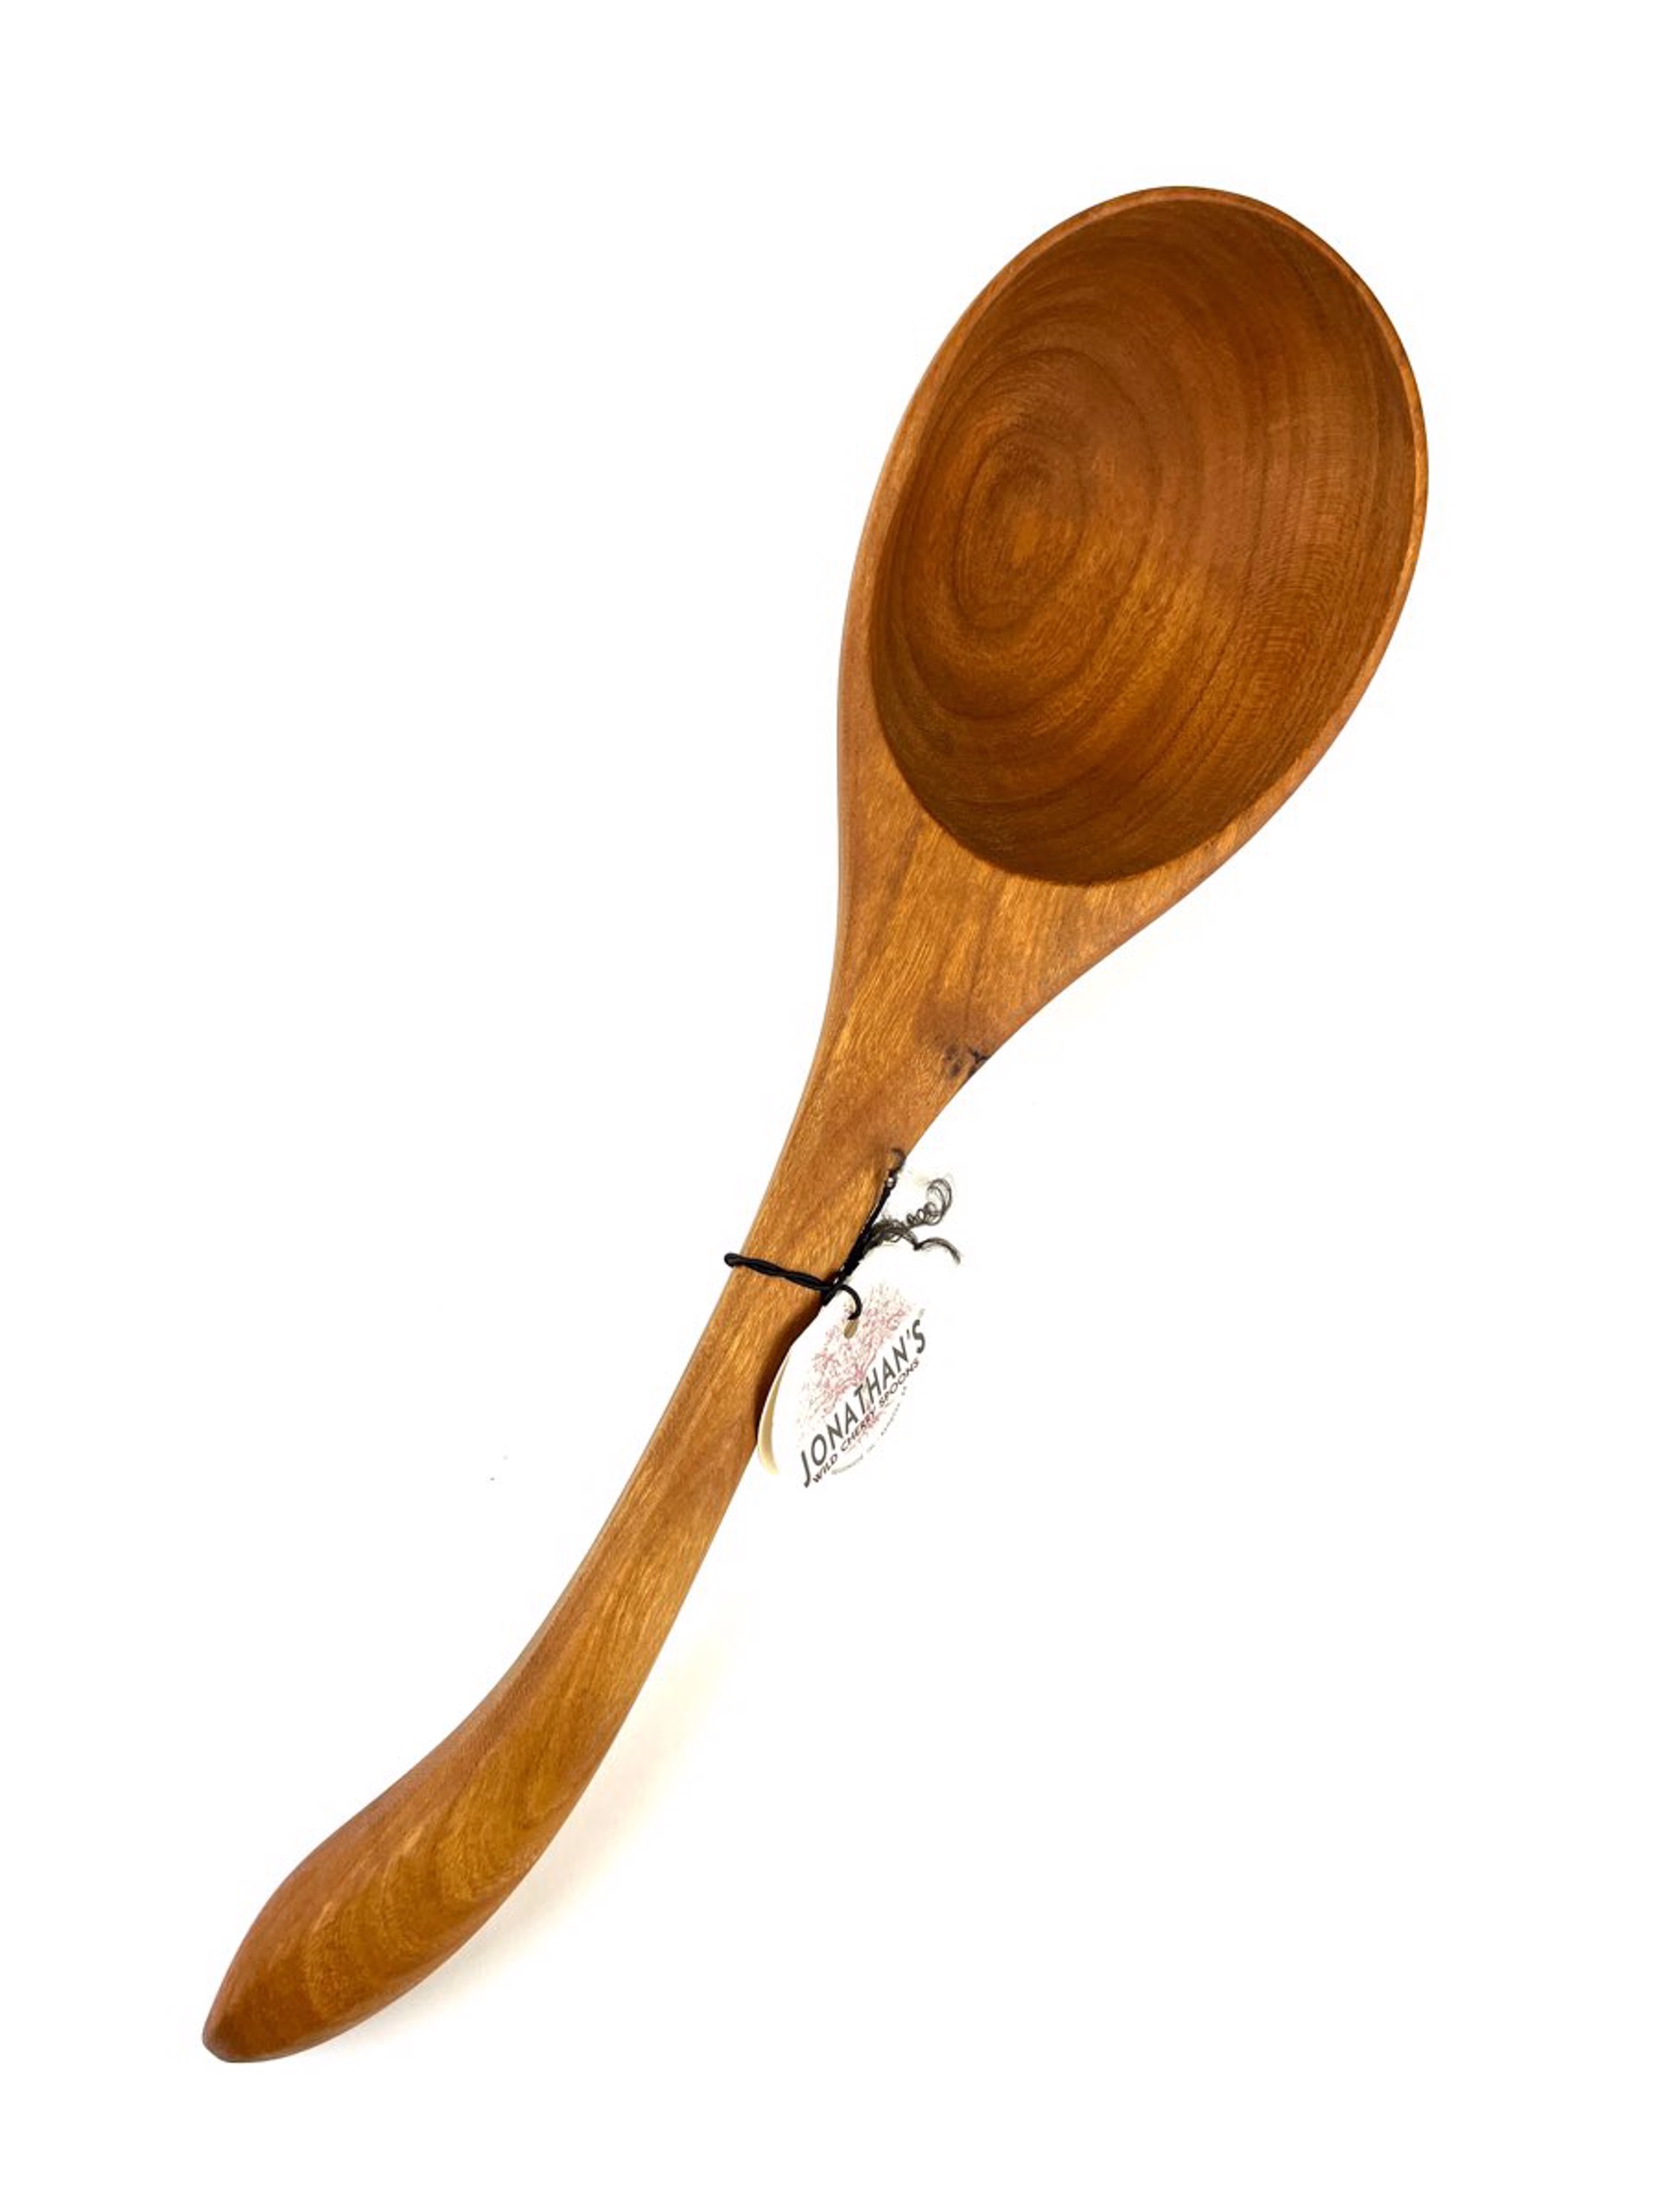 Medium Ladle by Jonathan's Spoons